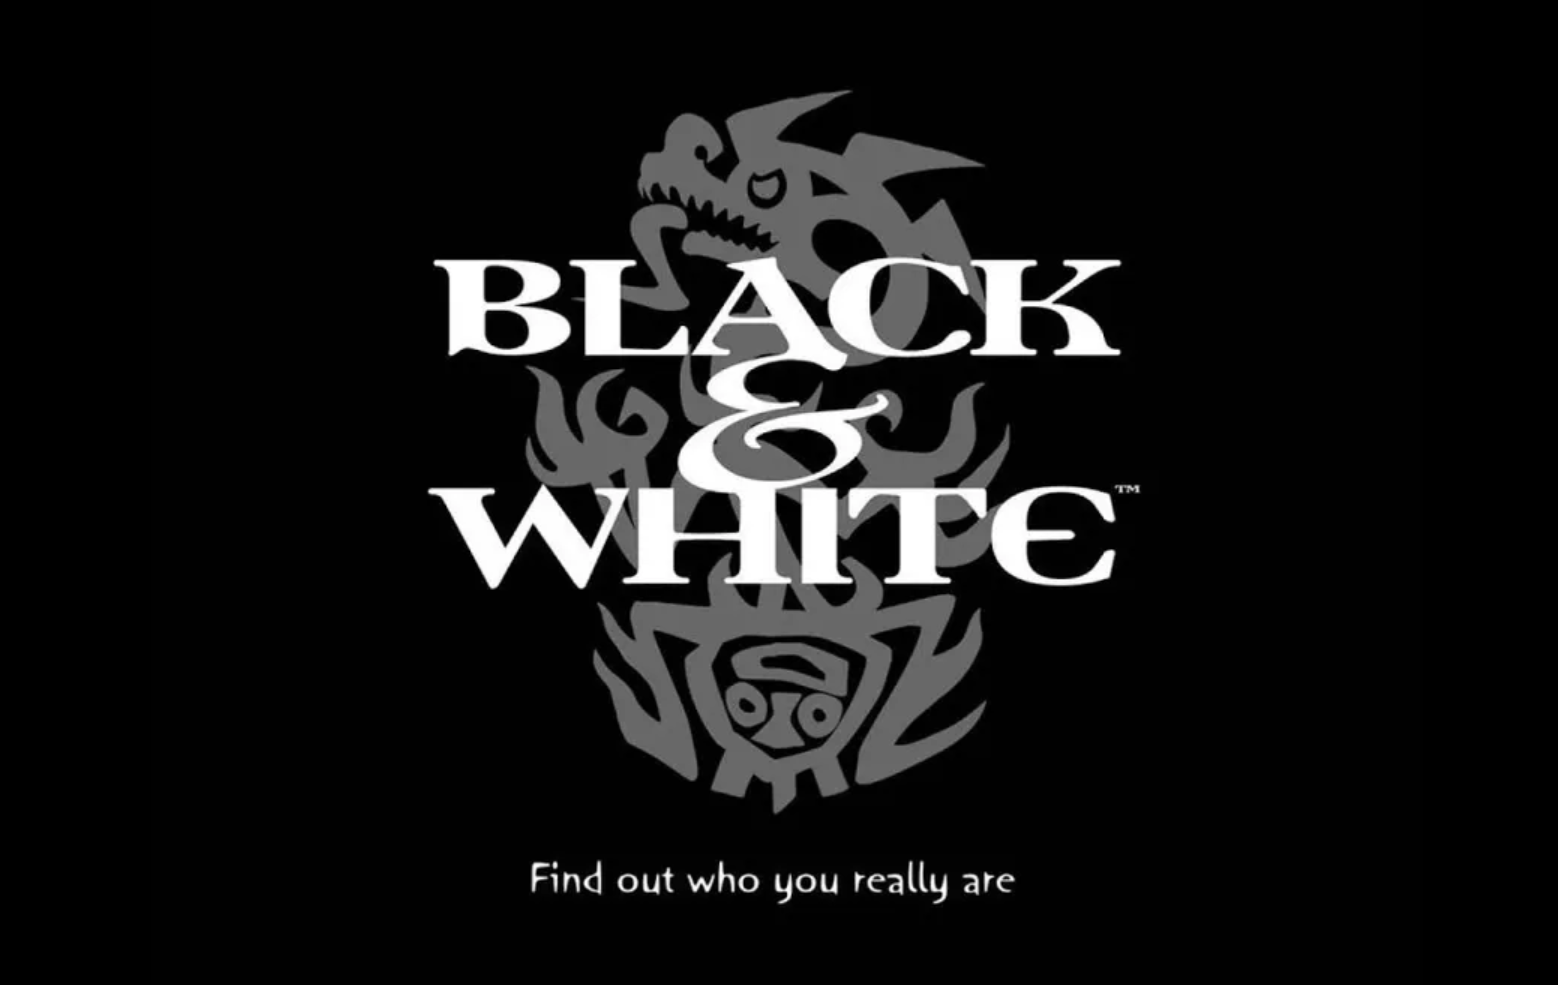 files/uploads/BW_ONE/Black and White Villager Banter Addon-314867125/black.png